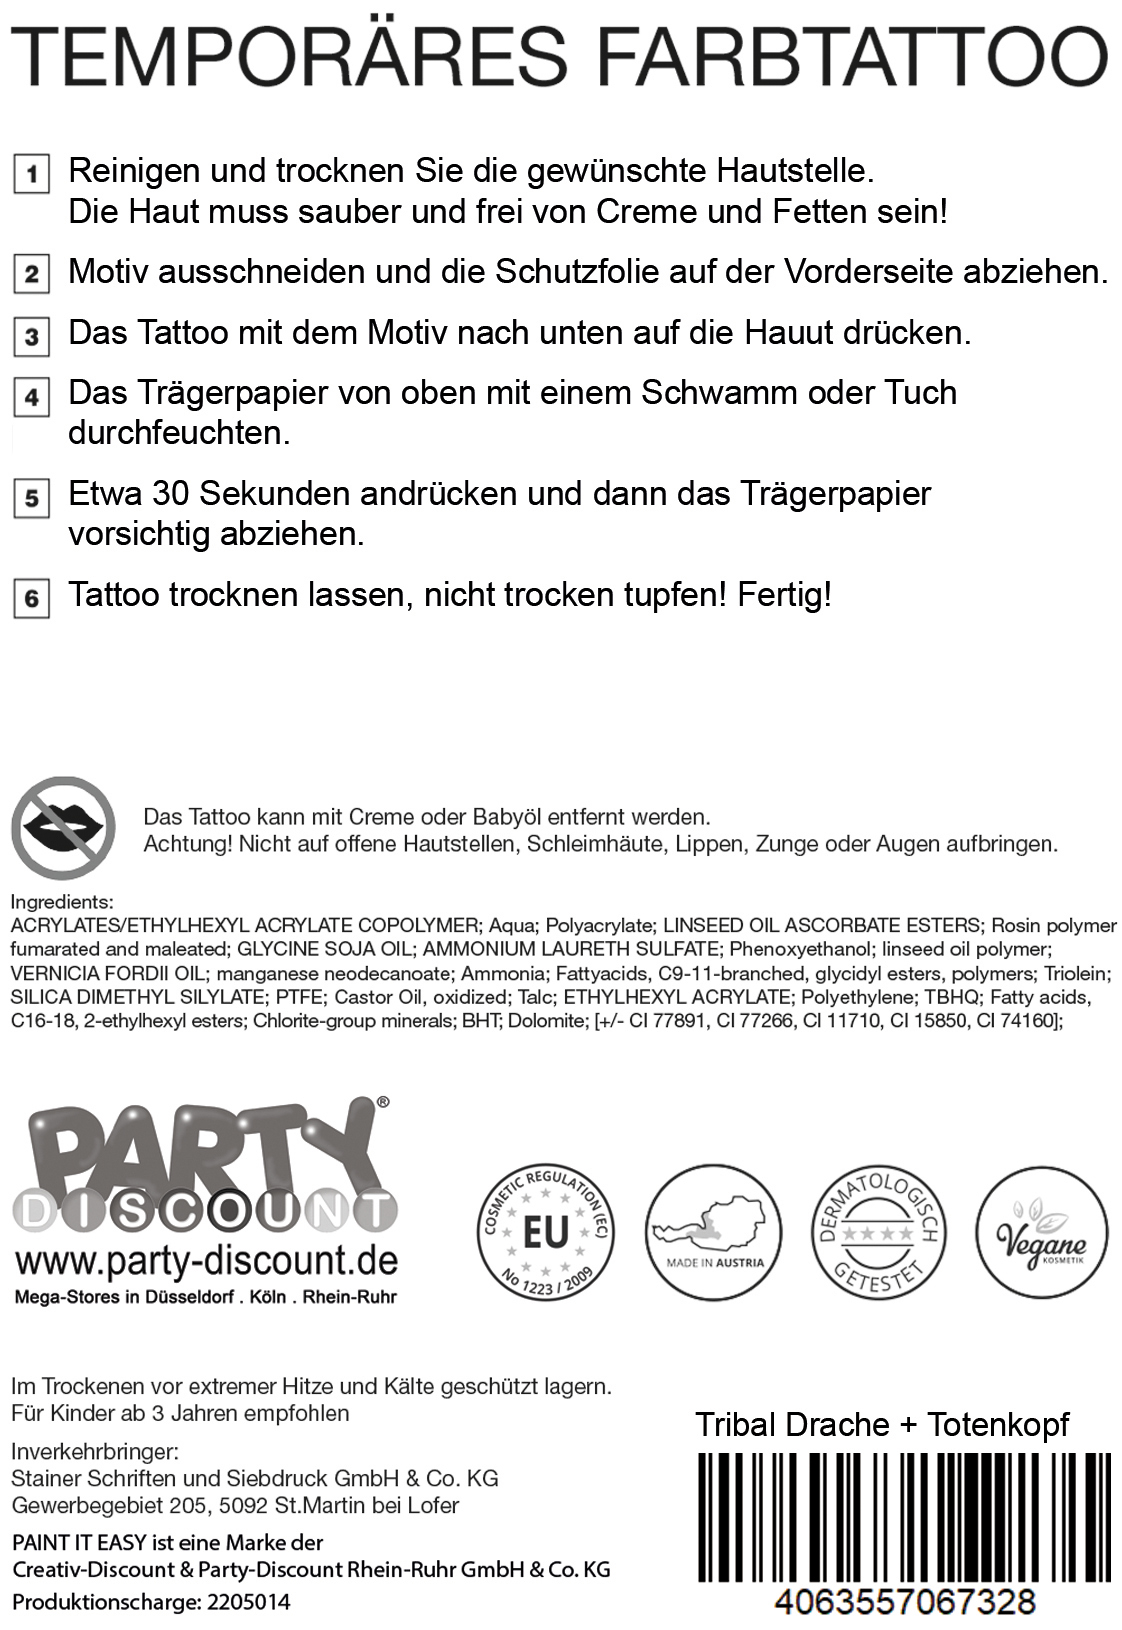 NEU Temporäres Tattoo-Motiv Reality, 10,5 x 14,8cm, Tribal Drache und Totenkopf Bild 3